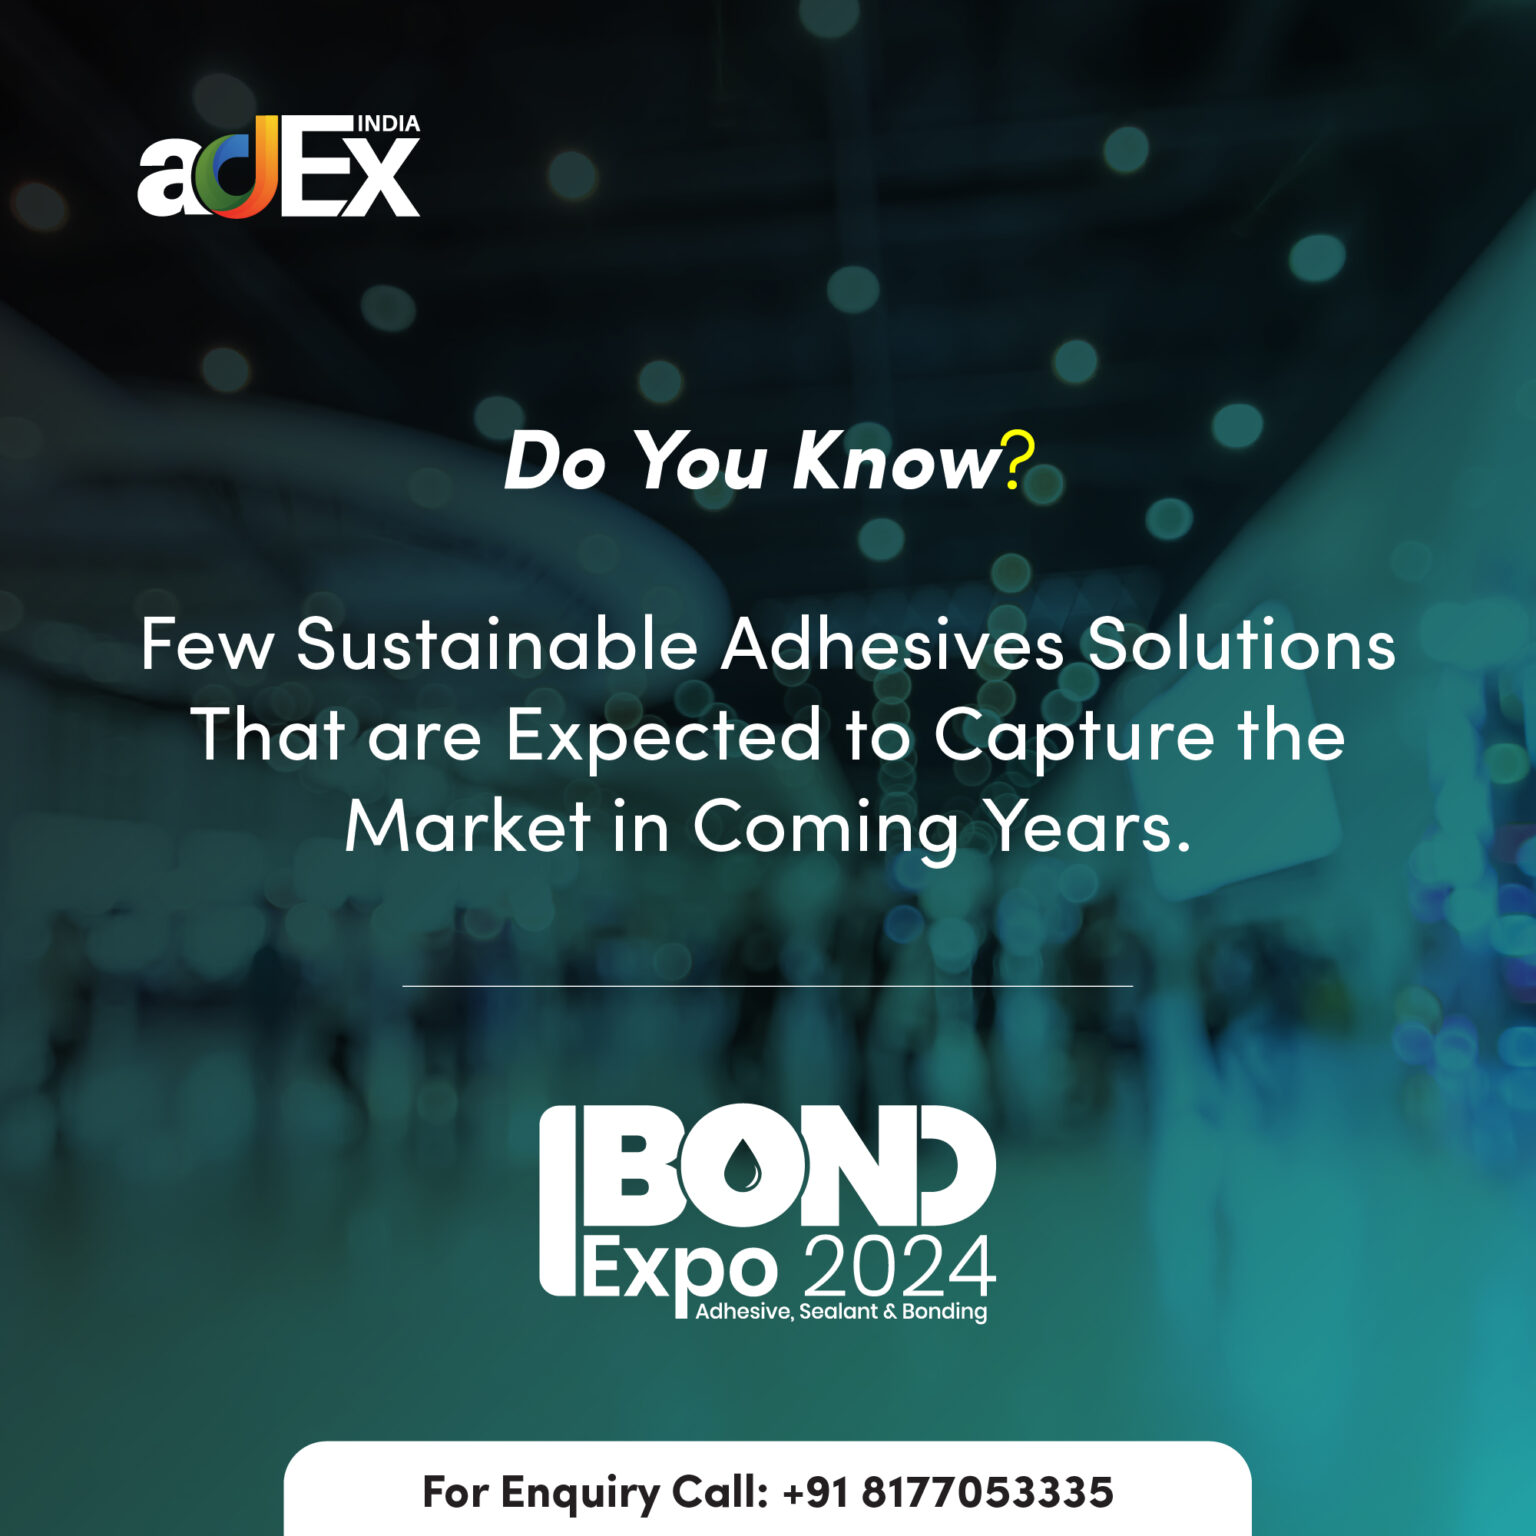 Adex India Bond Expo 2024 Largest Chemical Adhesive and Bonding Expo